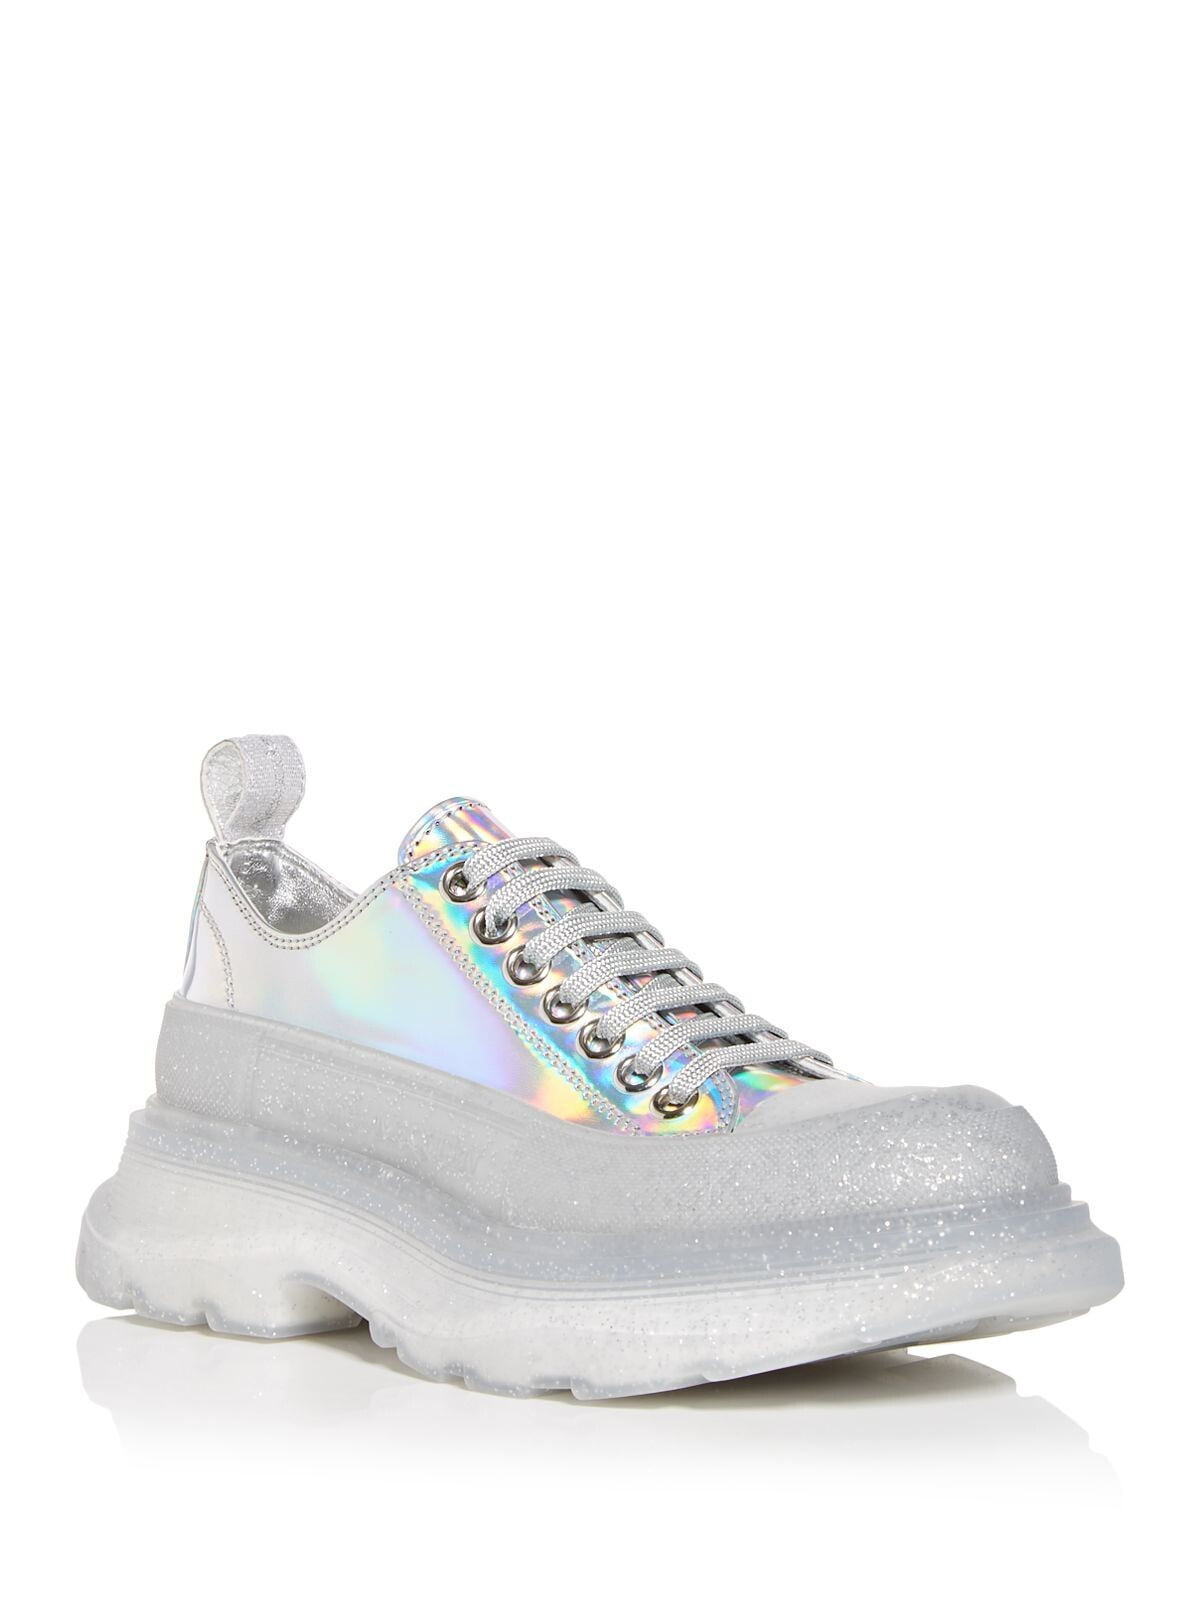 Alexander McQueen Tread Slick Iridescent Sparkle Translucent Sneaker Boots  38.5 | eBay